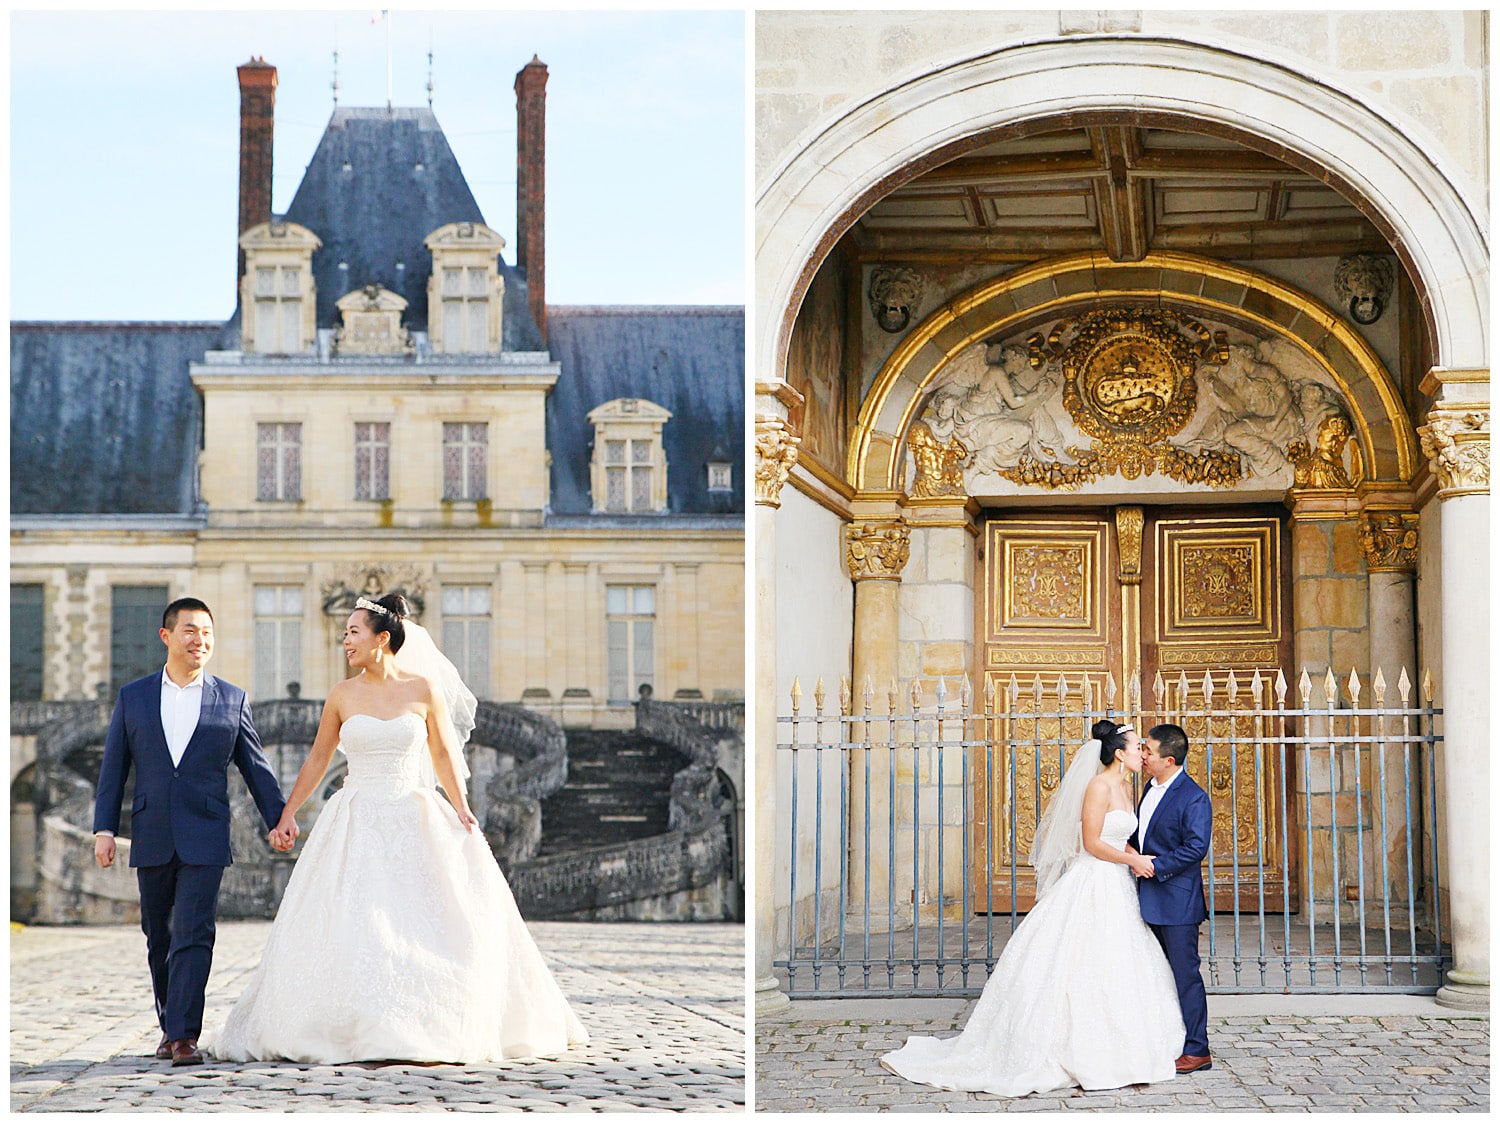 Marie-Calfopoulos-Provence-Paris-Photographer-Pre-Wedding-Photo-Session-Fontainebleau-Chateau-Palace-Castle_1